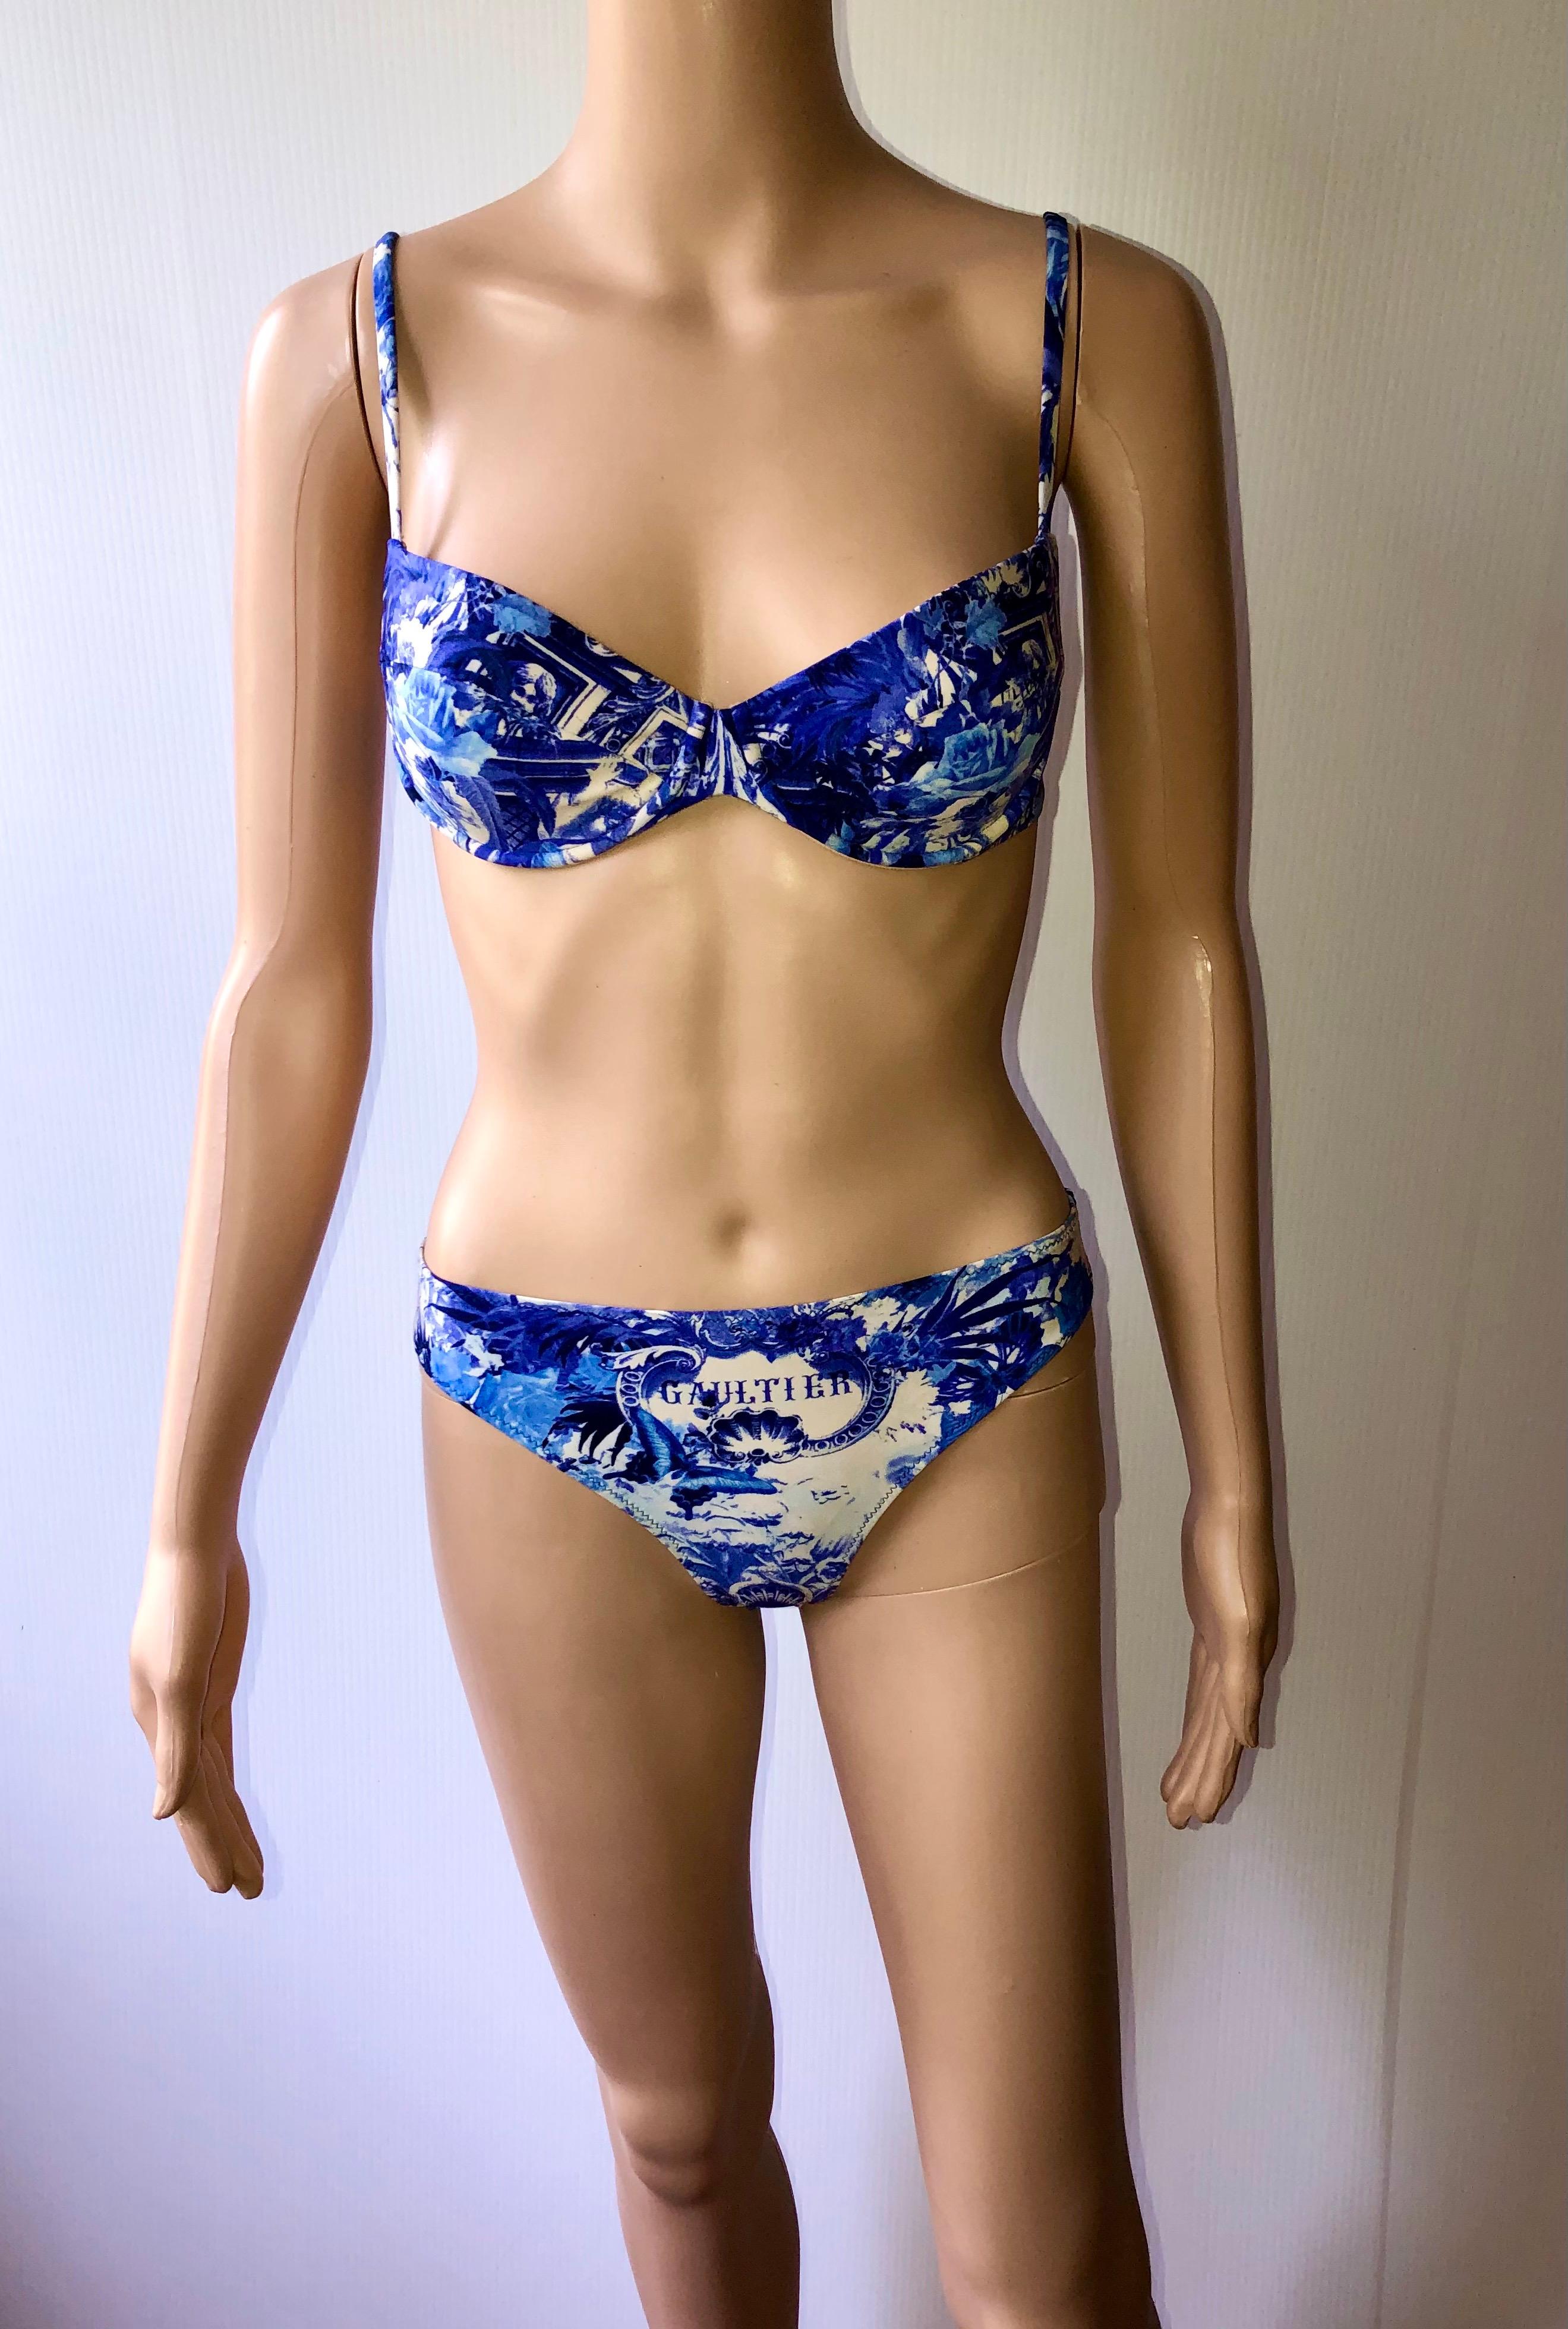 Jean Paul Gaultier Soleil S/S 1999 Flamingo Tropical Bikini Swimsuit 2 Piece Set In Excellent Condition For Sale In Naples, FL